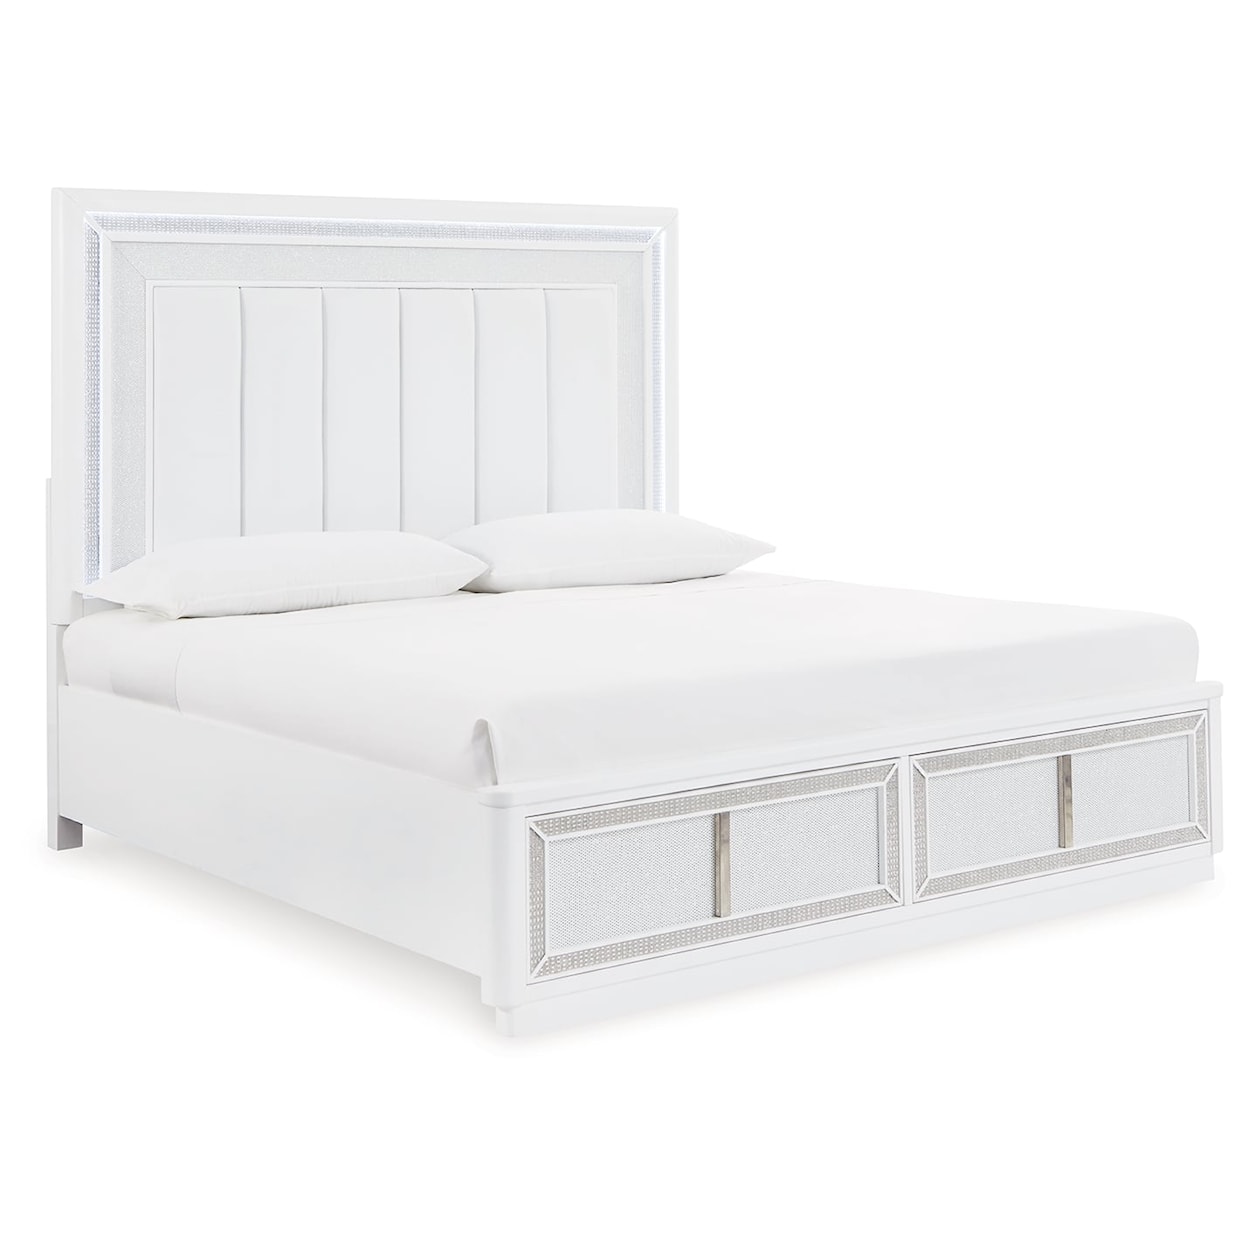 Benchcraft Chalanna King Upholstered Storage Bed